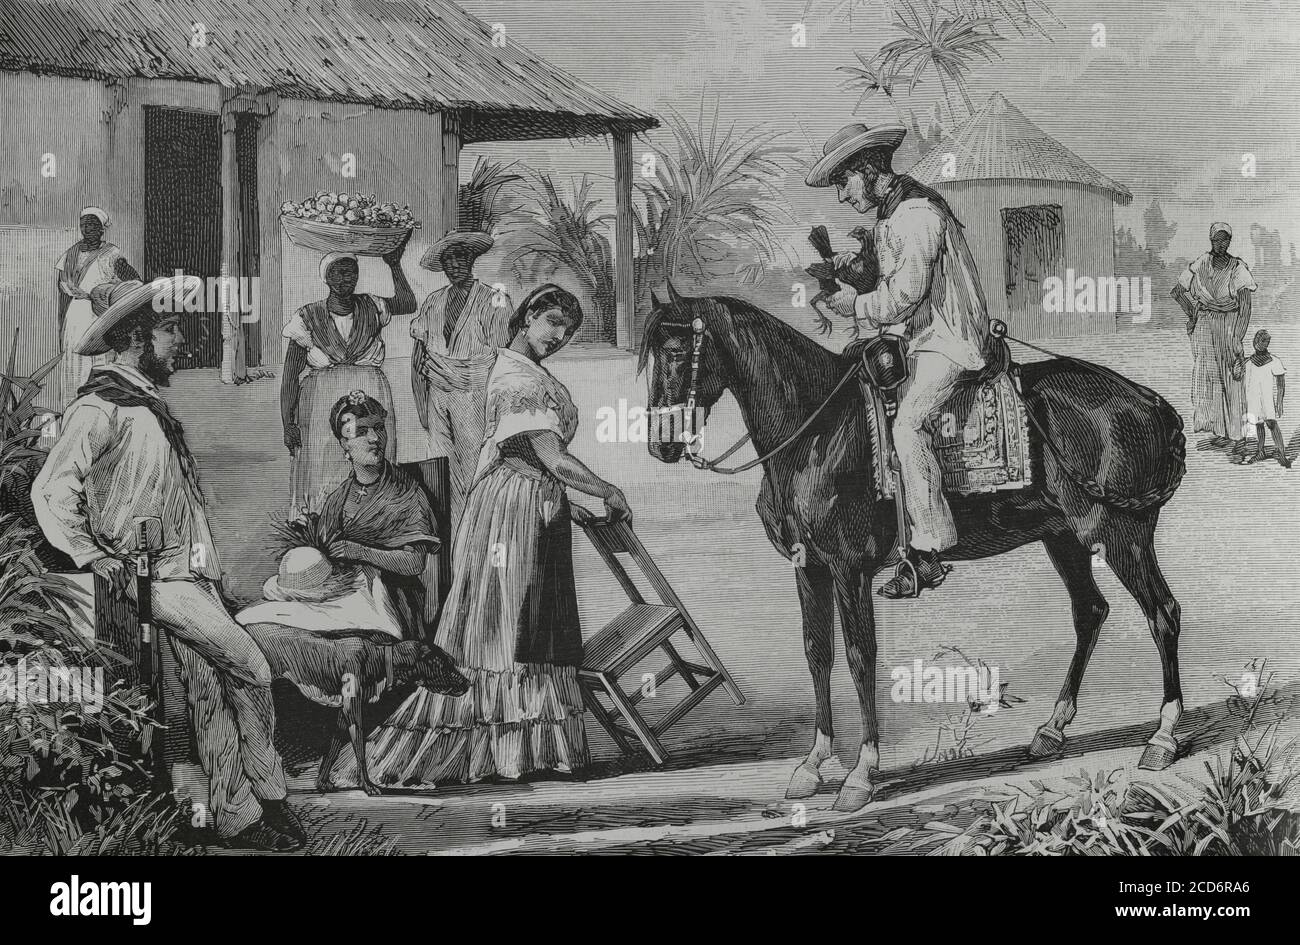 Island of Cuba. Family of guajiros (Cuban farmers). Engraving after an illustration of Victor Patricio Landaluze. La Ilustracion Española y Americana, 1881. Stock Photo